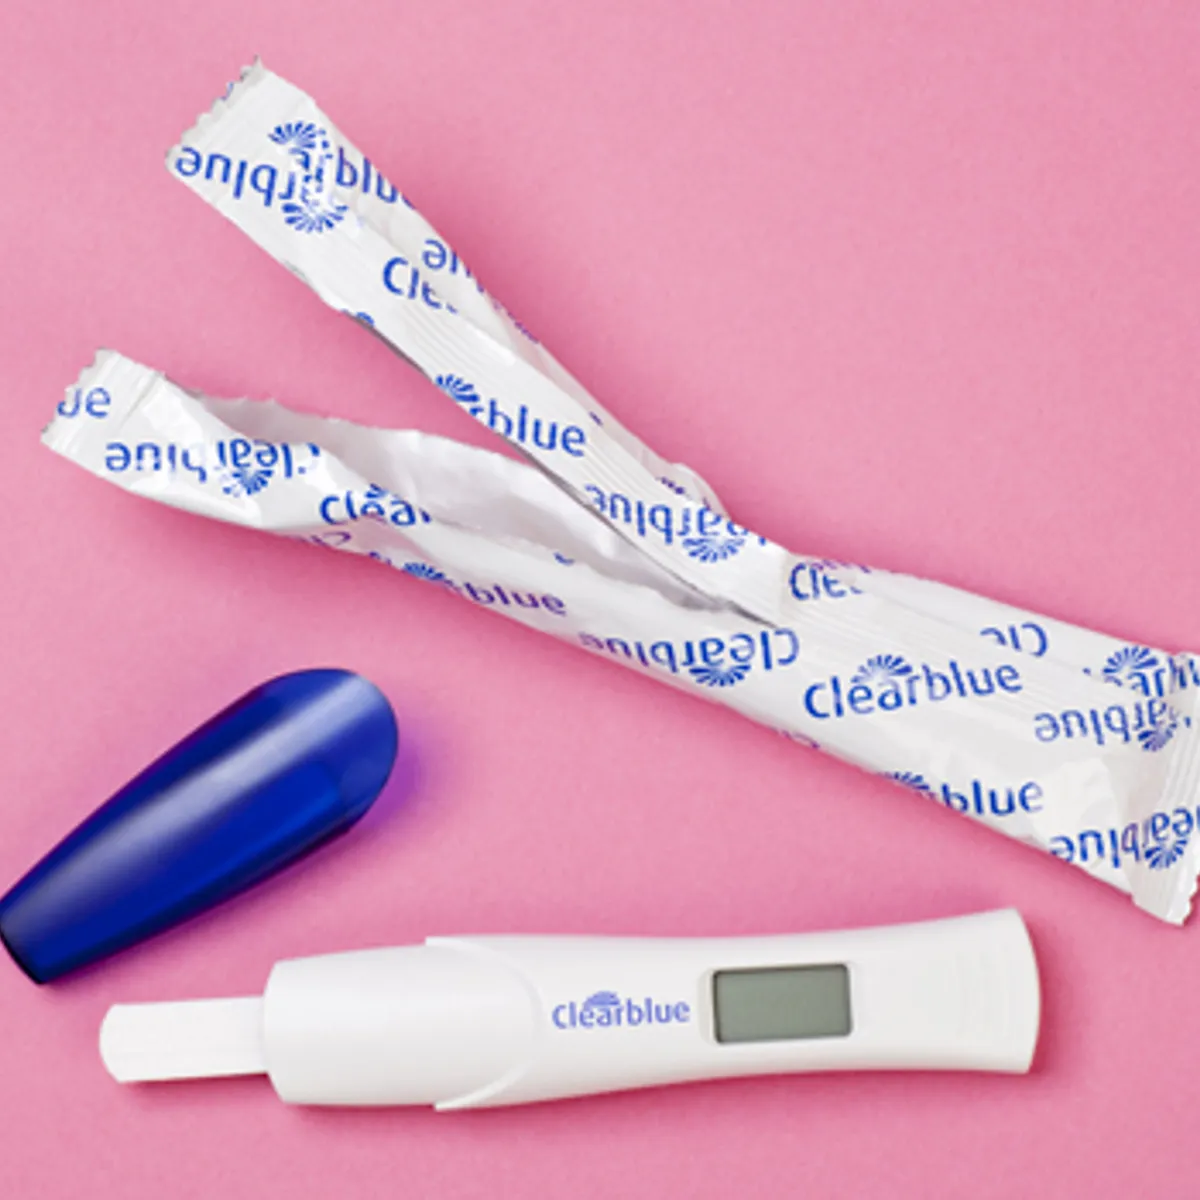 Clearblue Digital Pregnancy Tests Guide - Weldricks Pharmacy